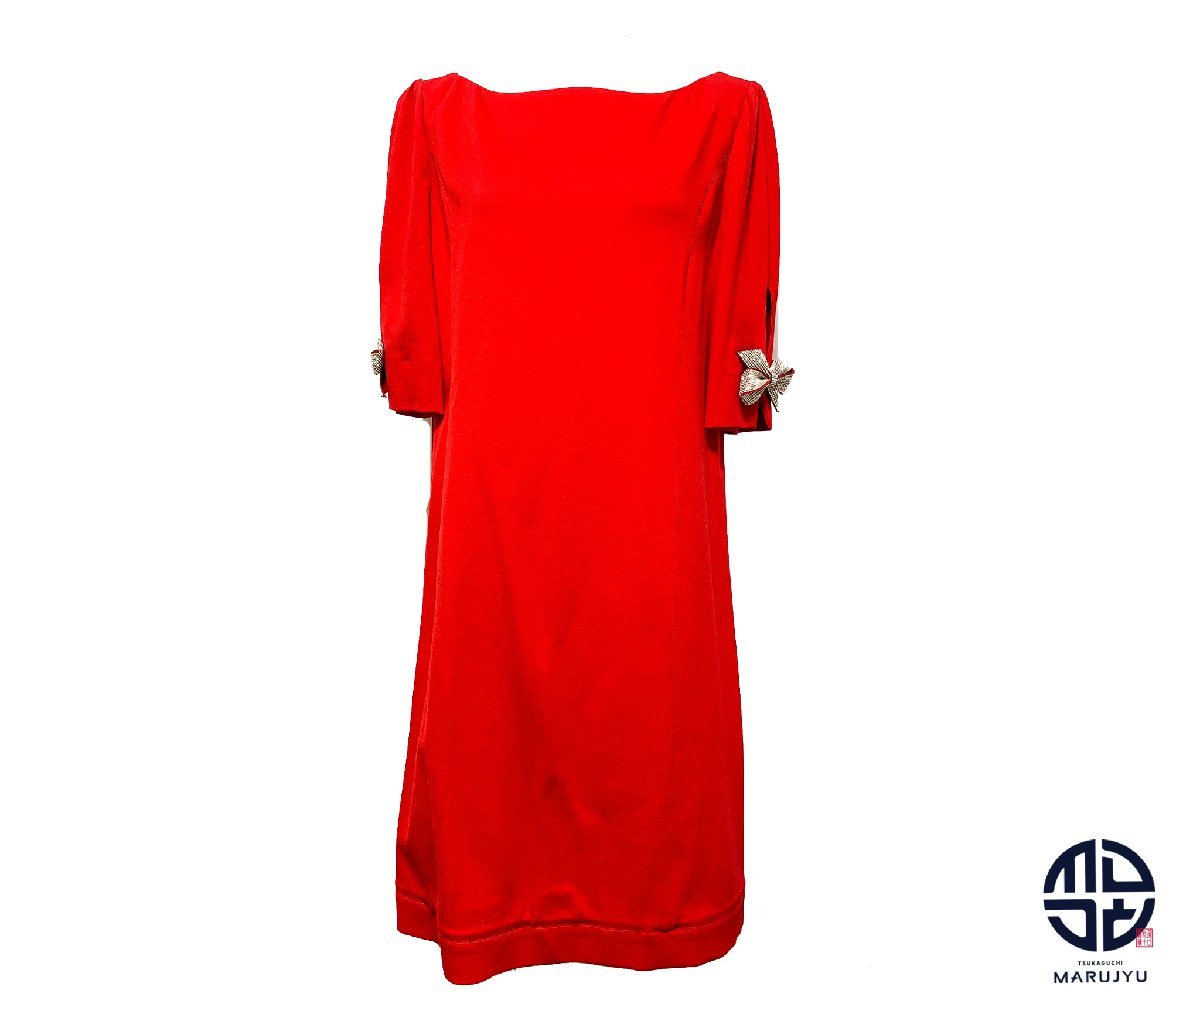 BLUMARINE Blumarine ブルマリン 赤 リボン ドレス 23116 レディース 半袖 アパレル サイズ44